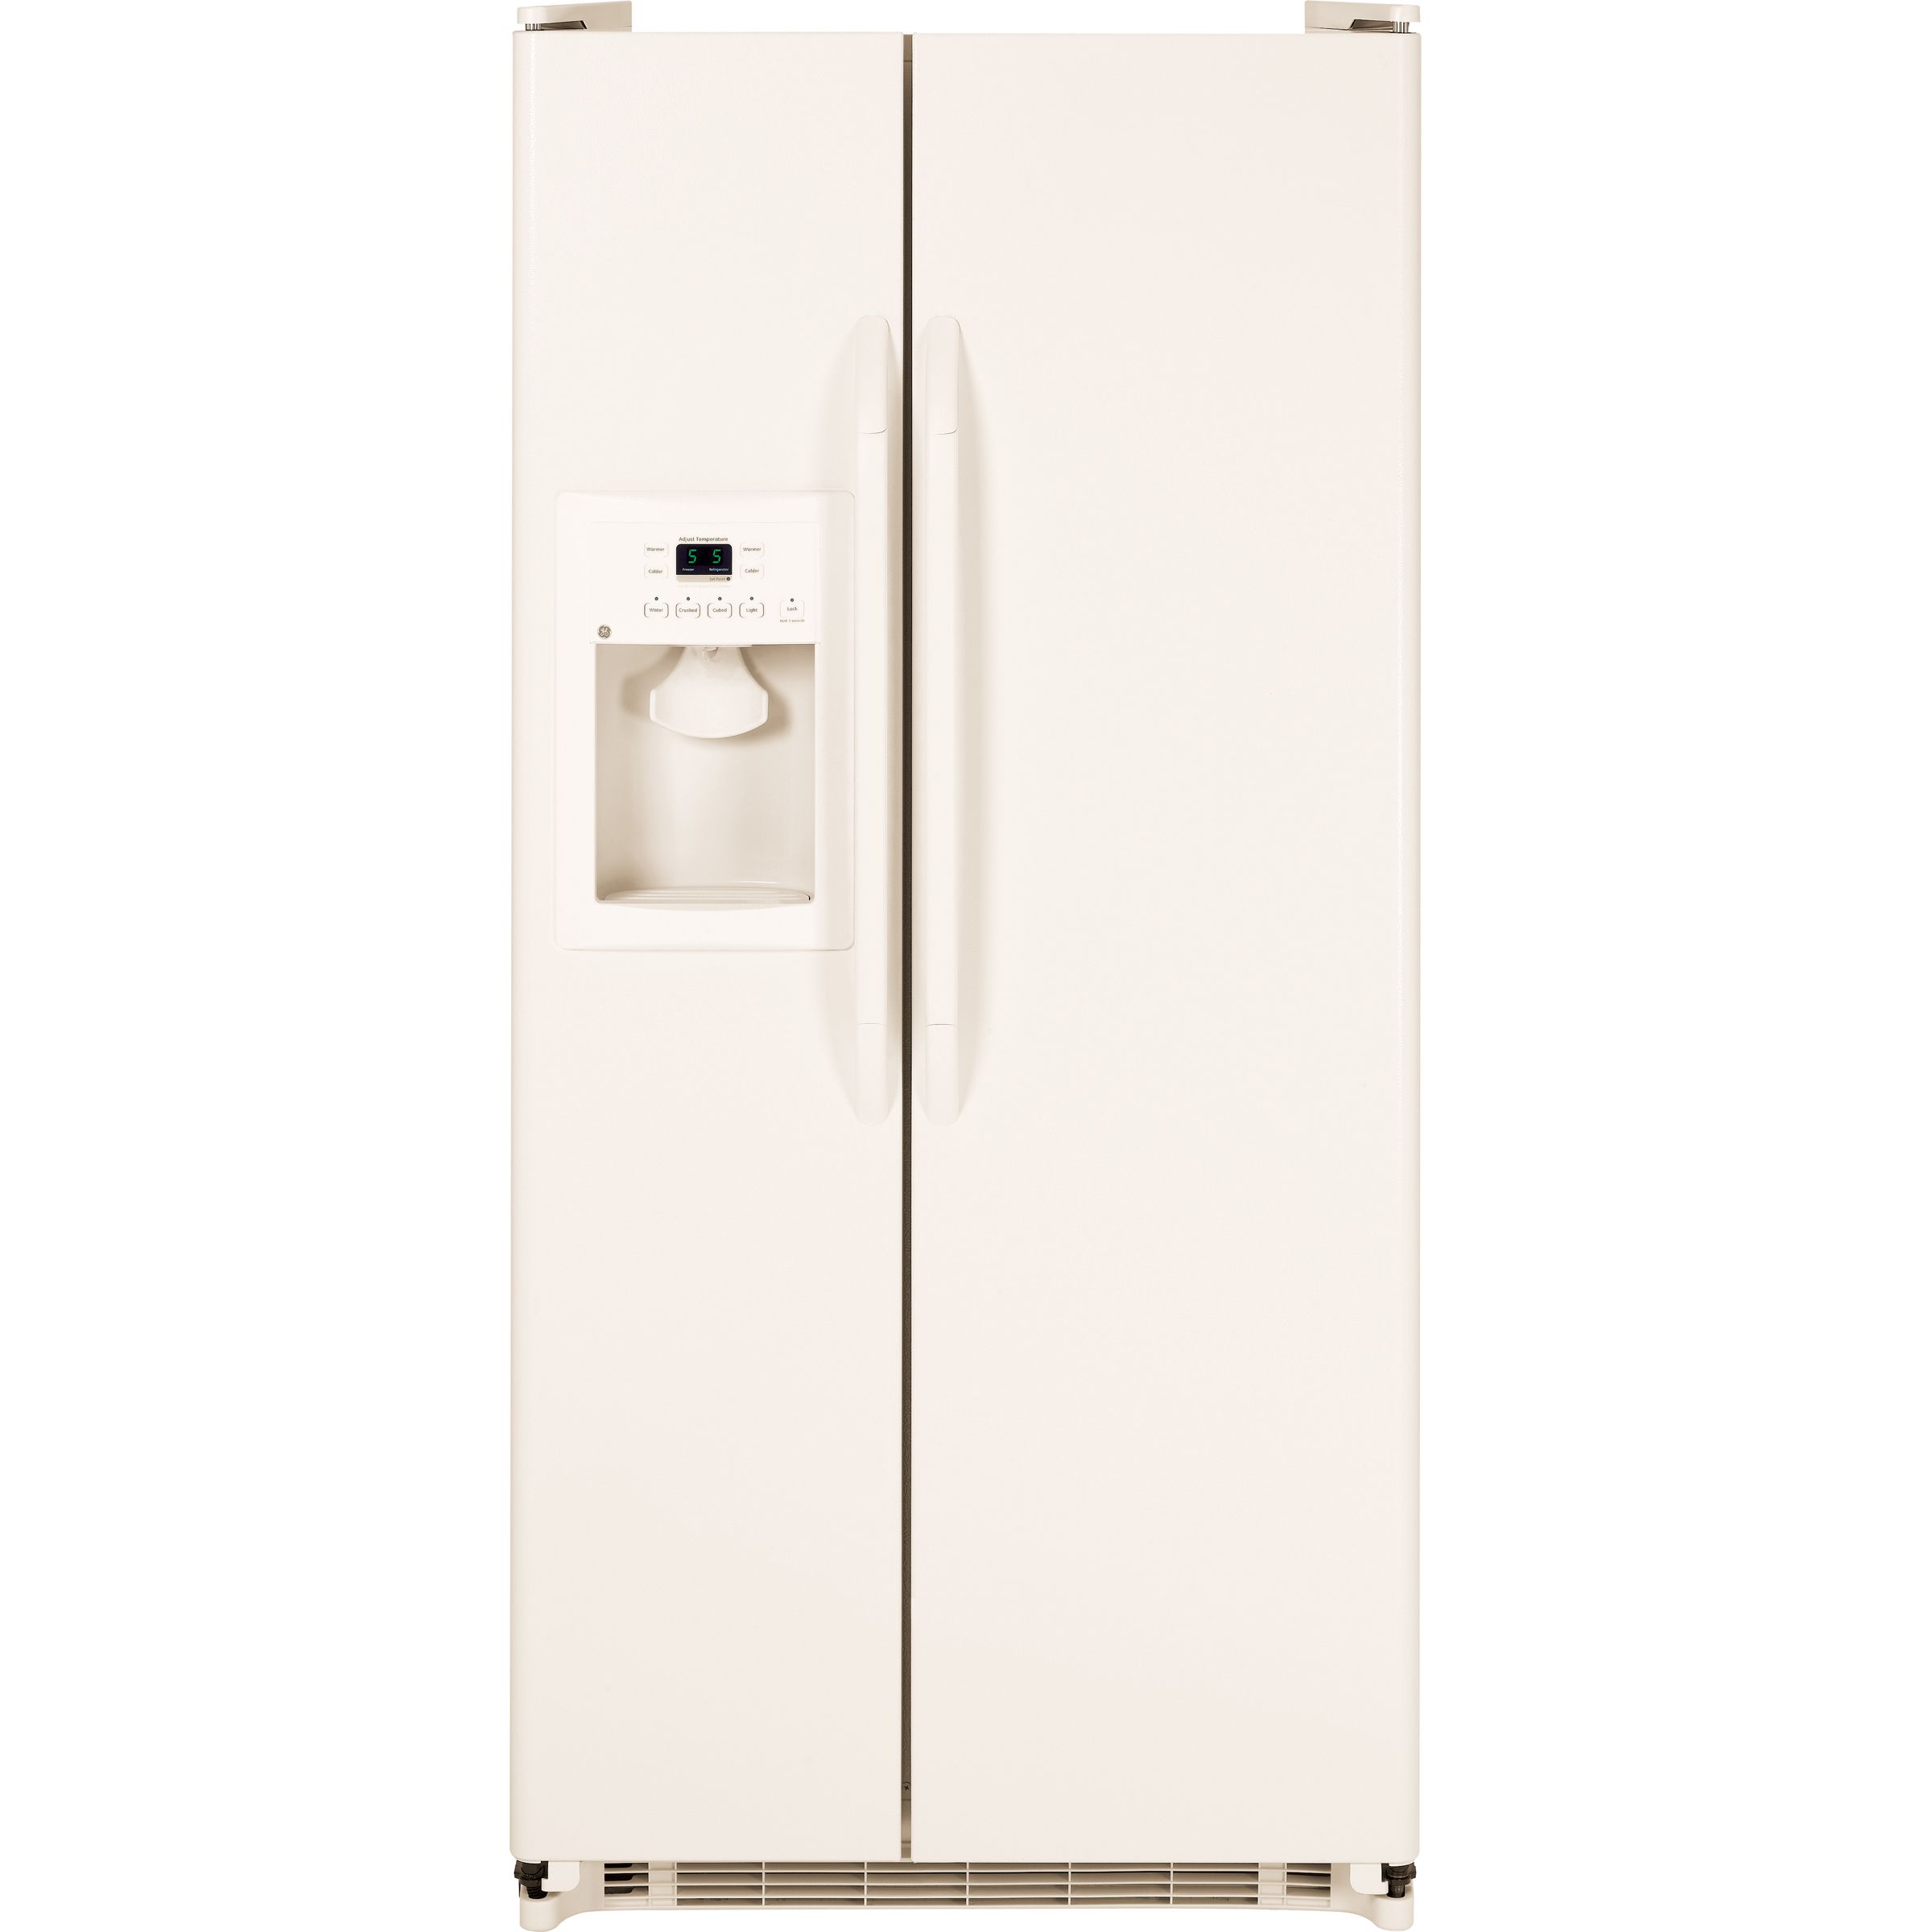 Refrigerator - W Series logo